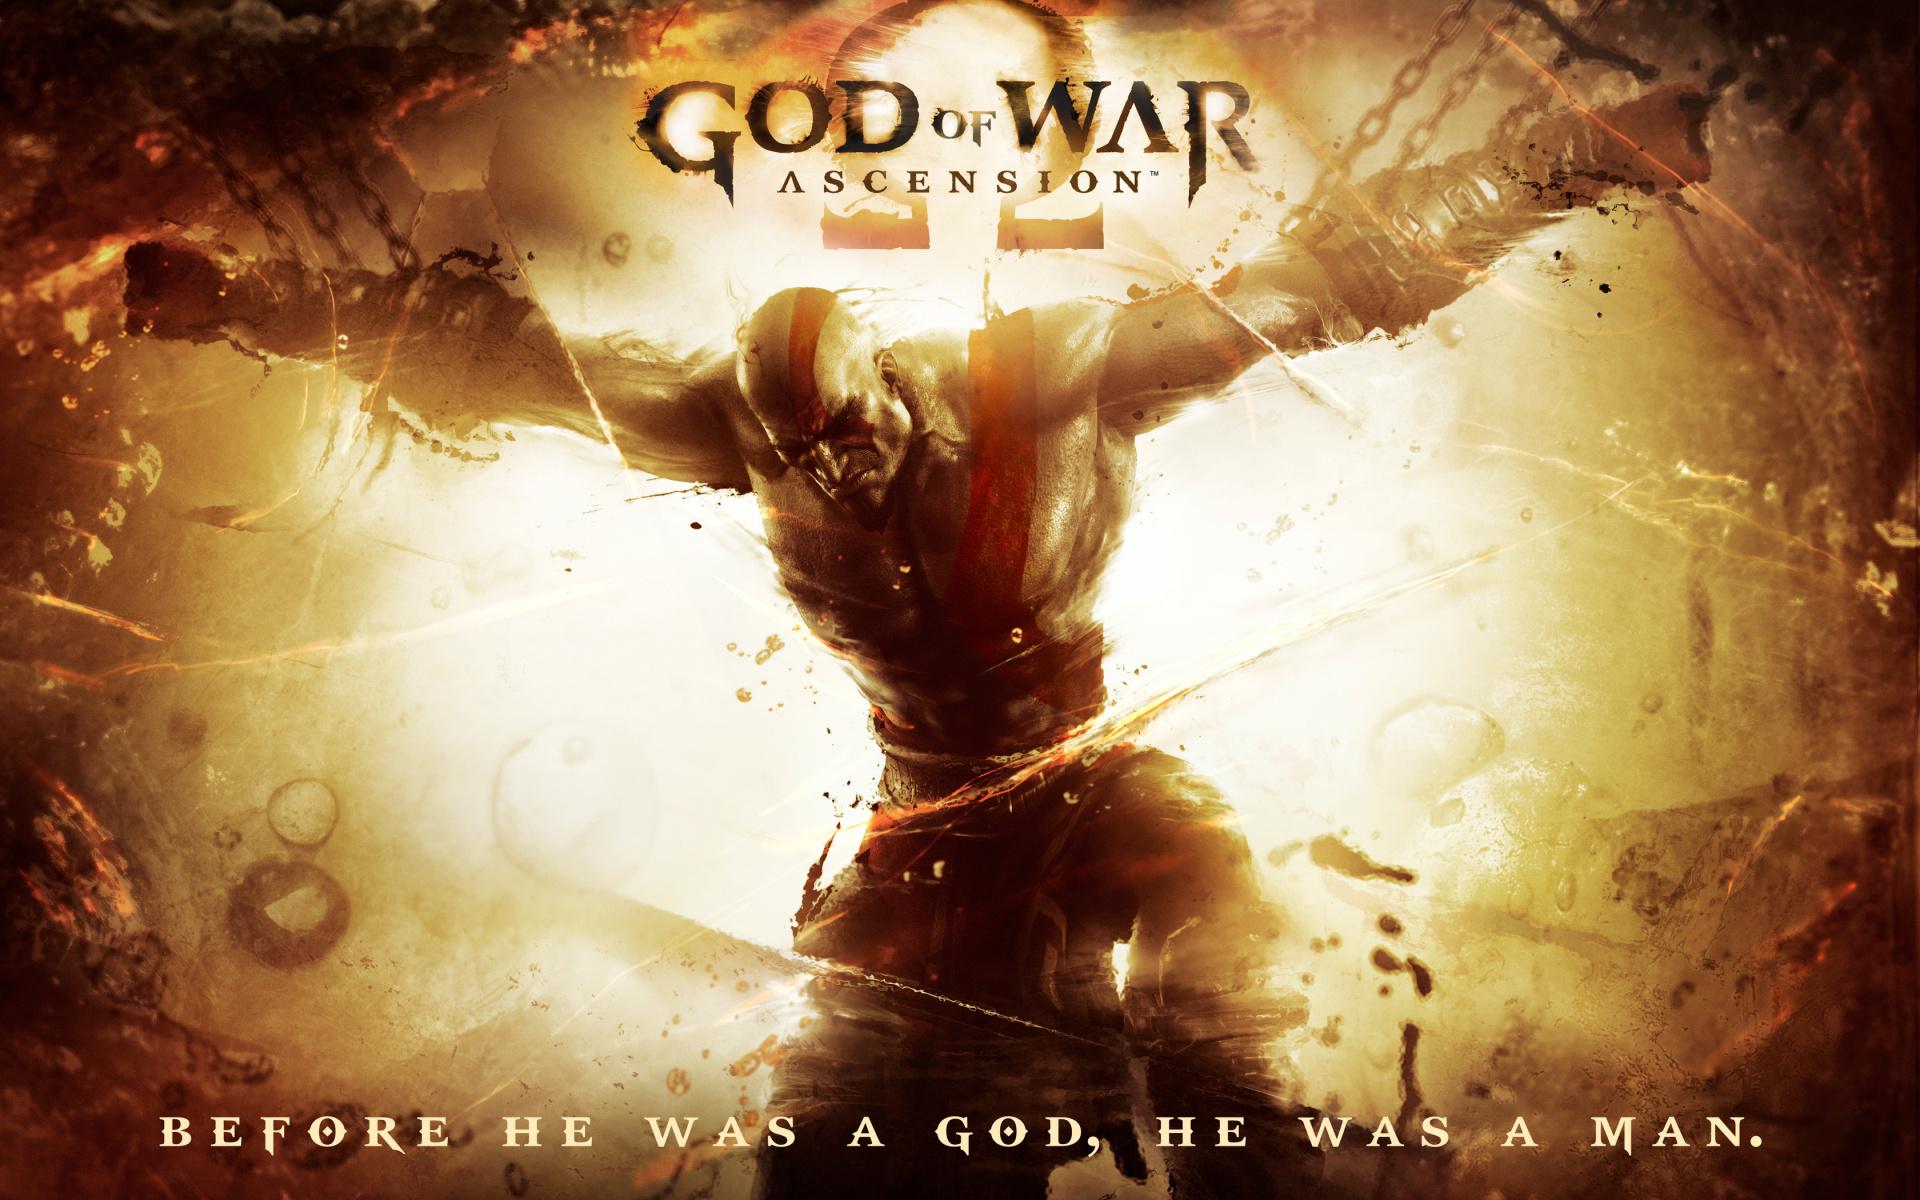 god of war 3 pc requisitos